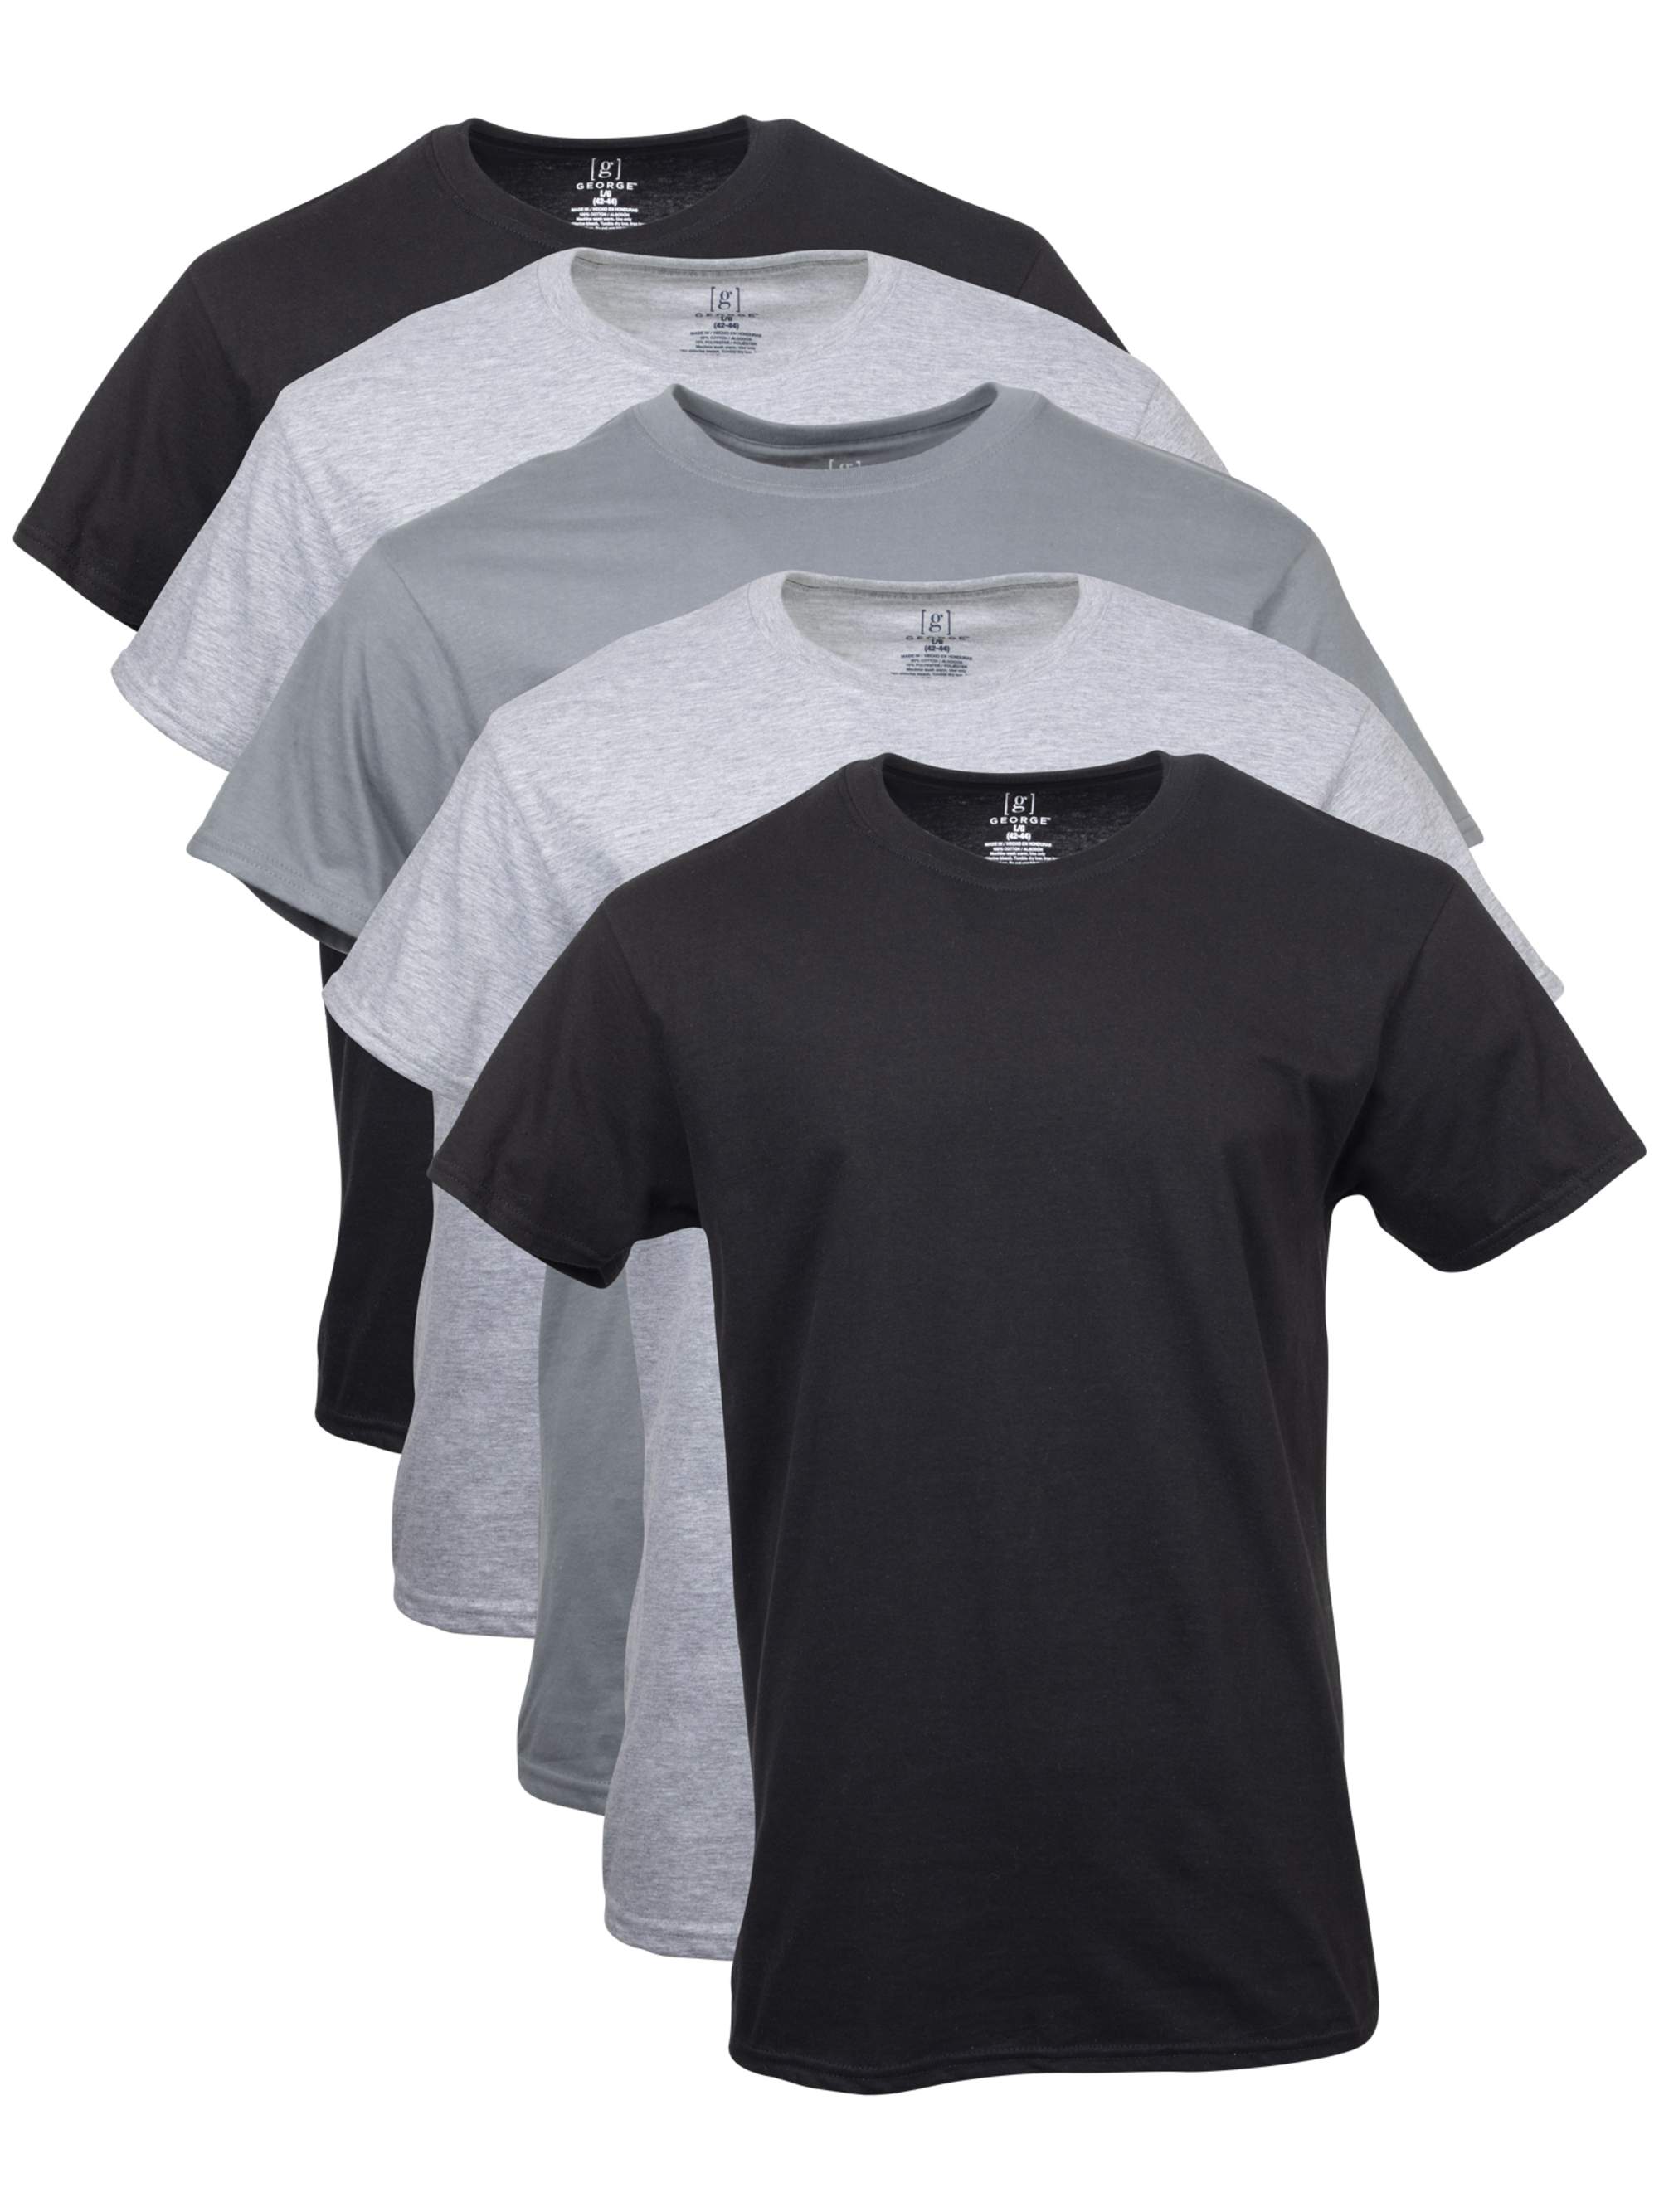 George Men's Crew T-Shirts, 5-Pack - Walmart.com